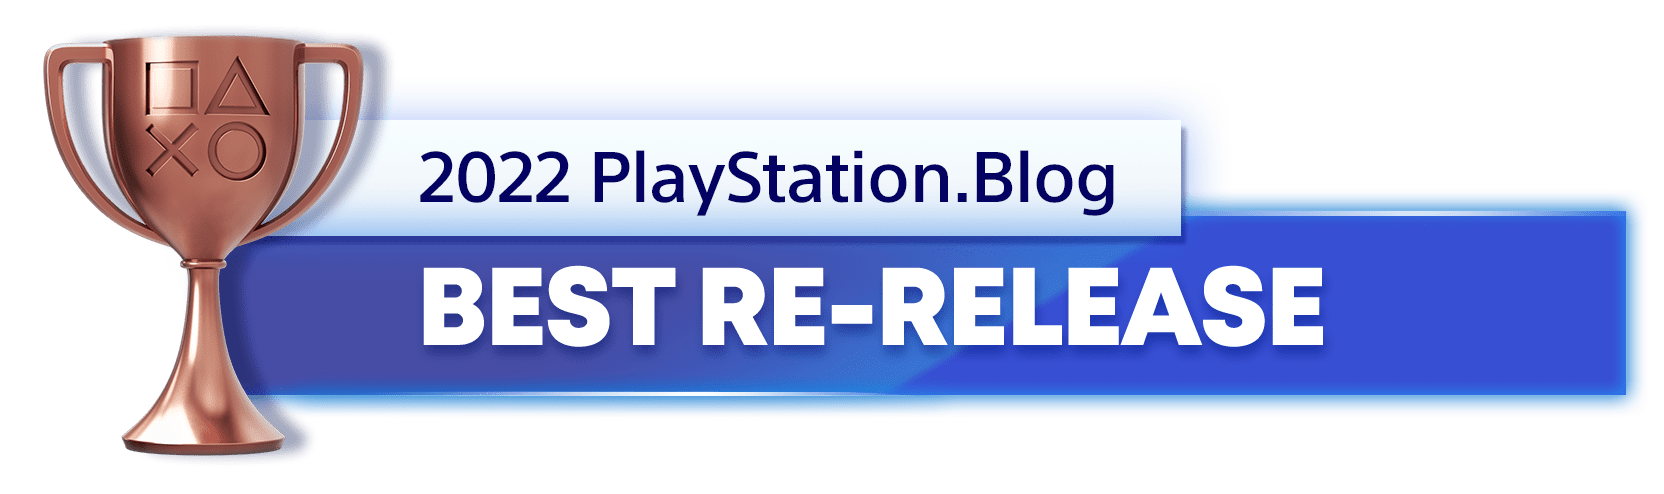 PlayStation Blog's 2022 Bronze trophy for best re-release